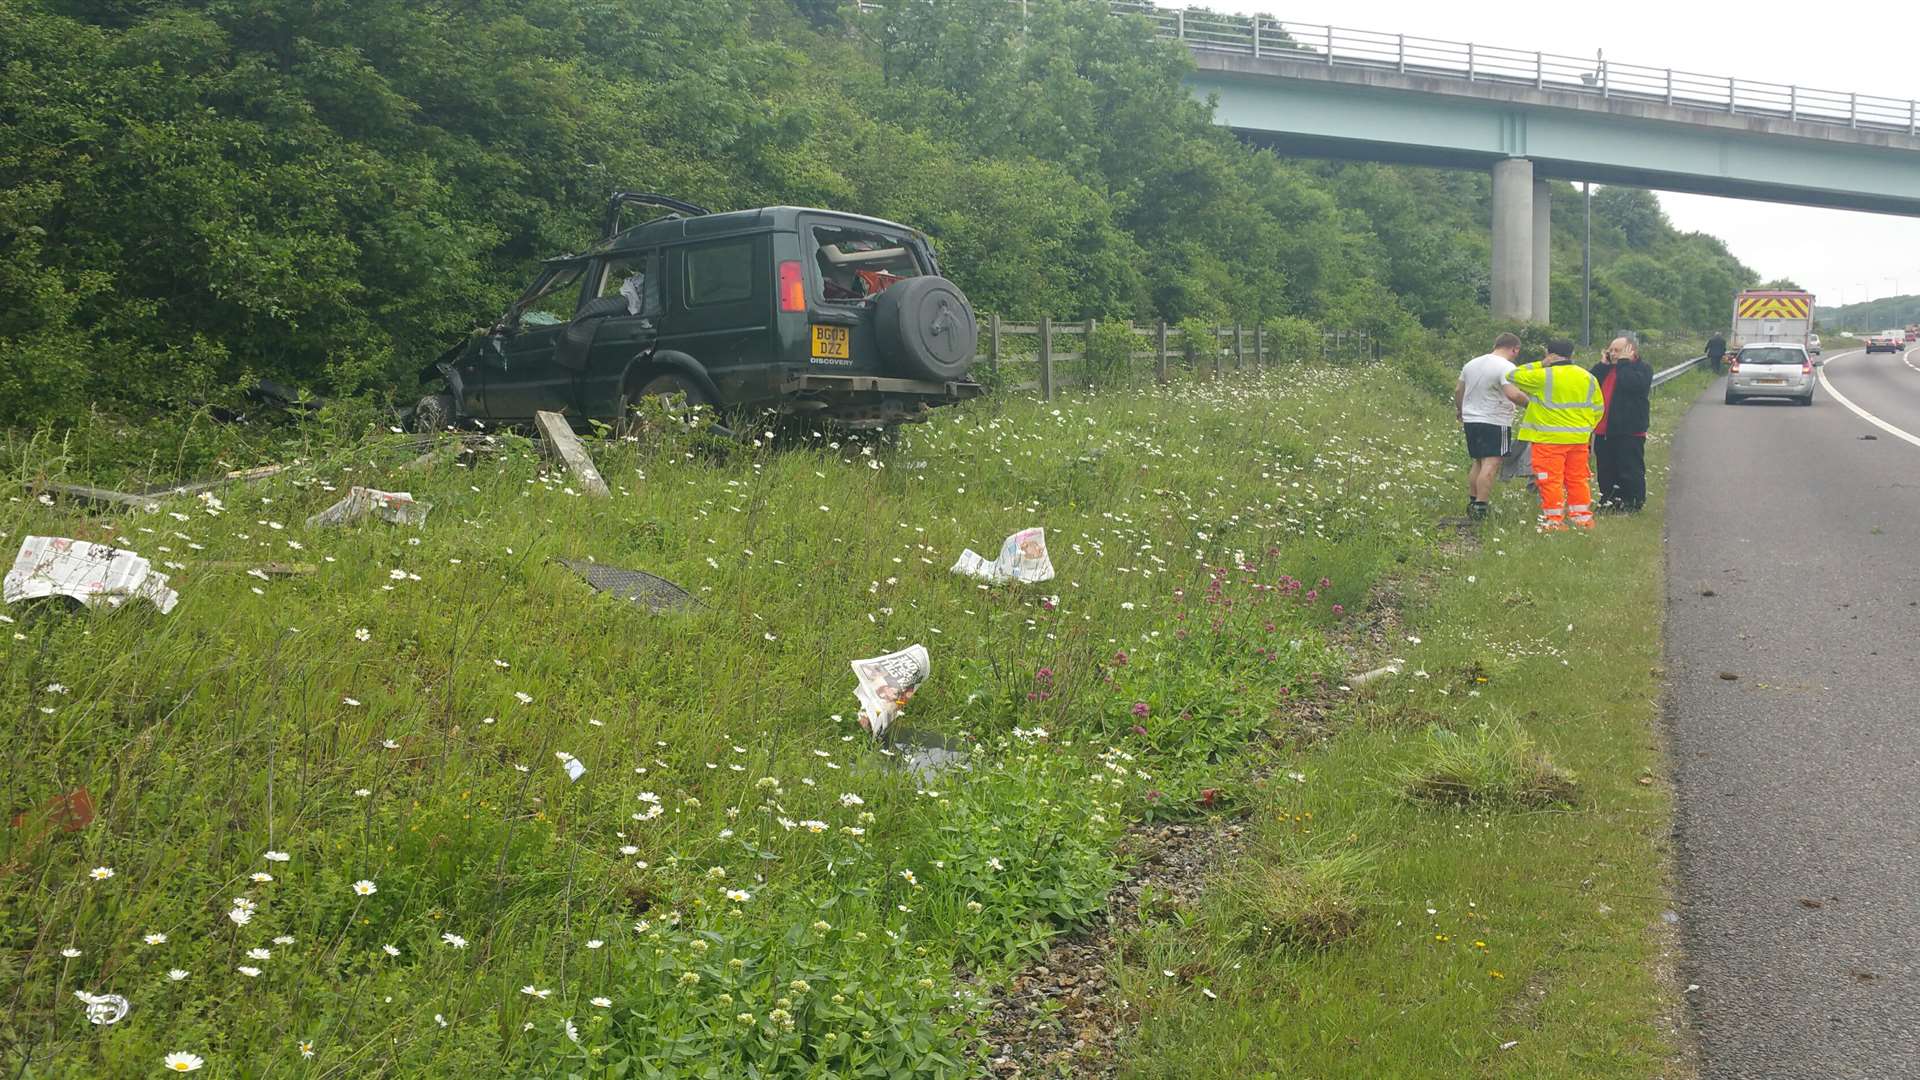 The crash scene on the M2